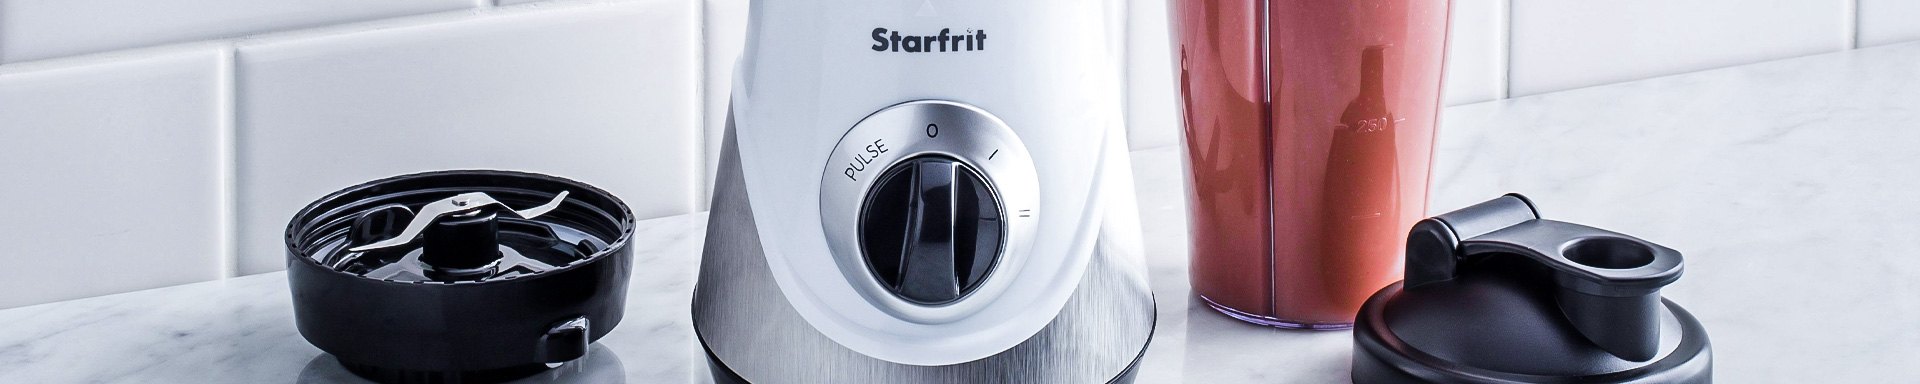 Starfrit Small Appliances